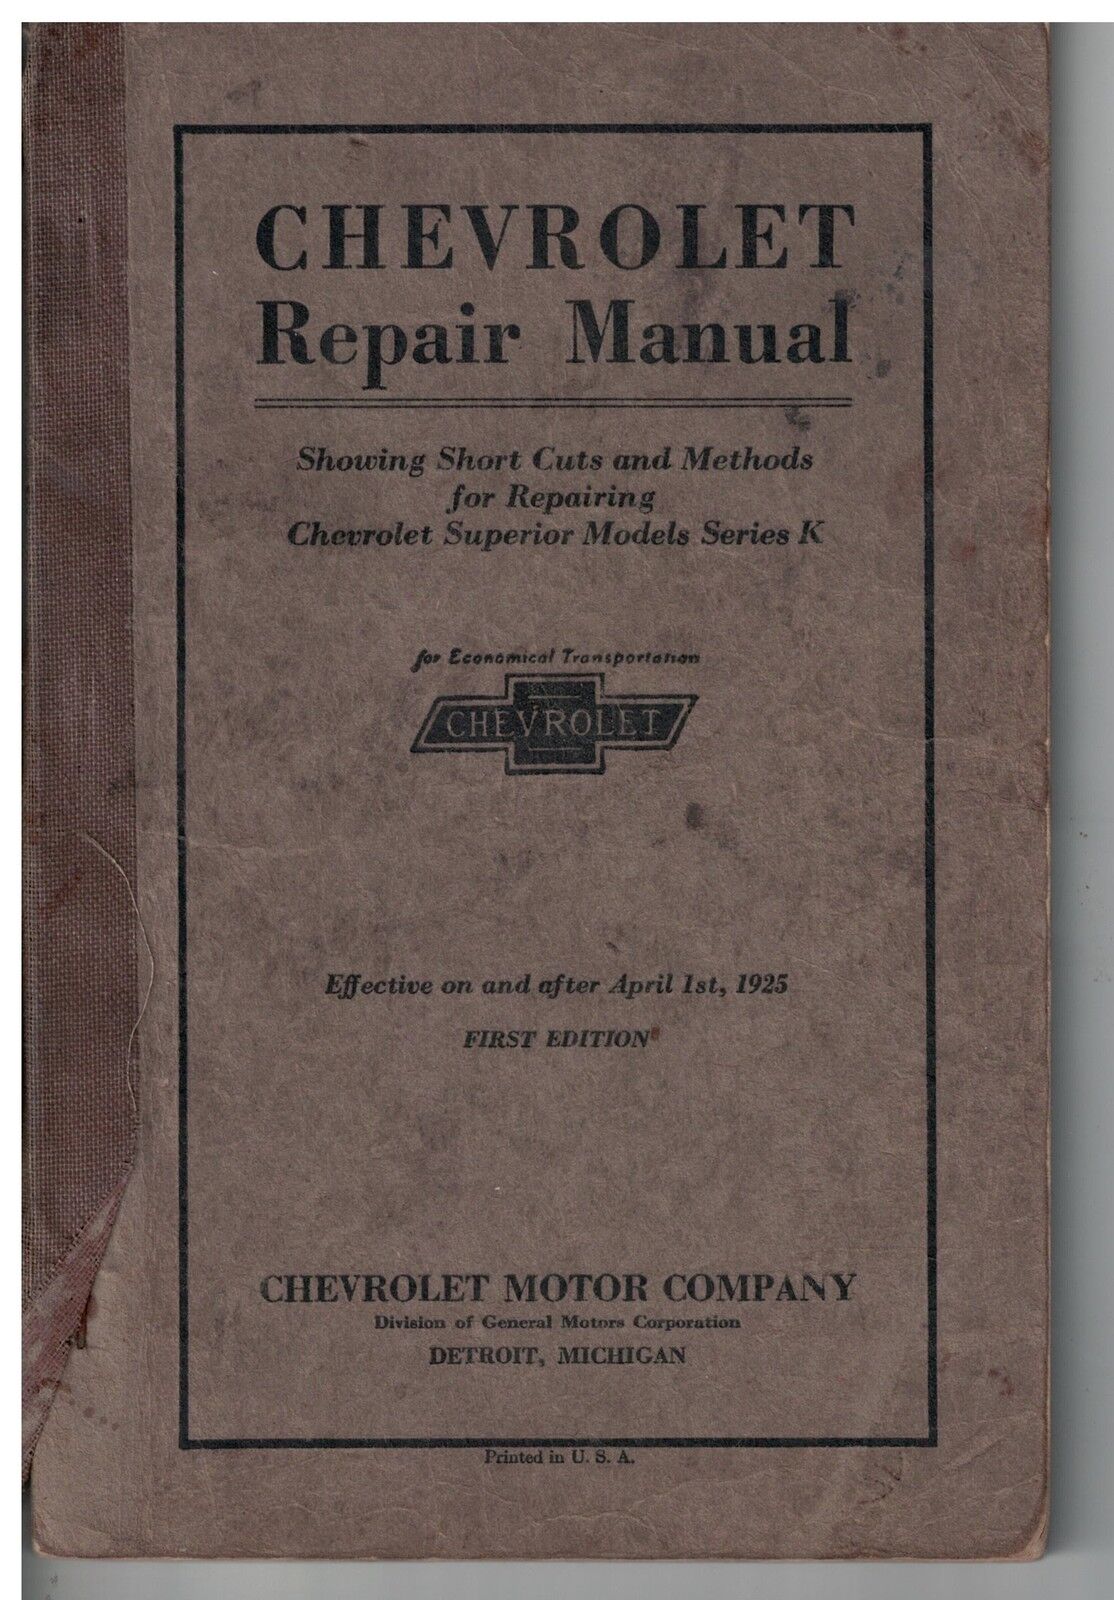 Vintage 1925 1st Edition Chevrolet Repair Manual - Original